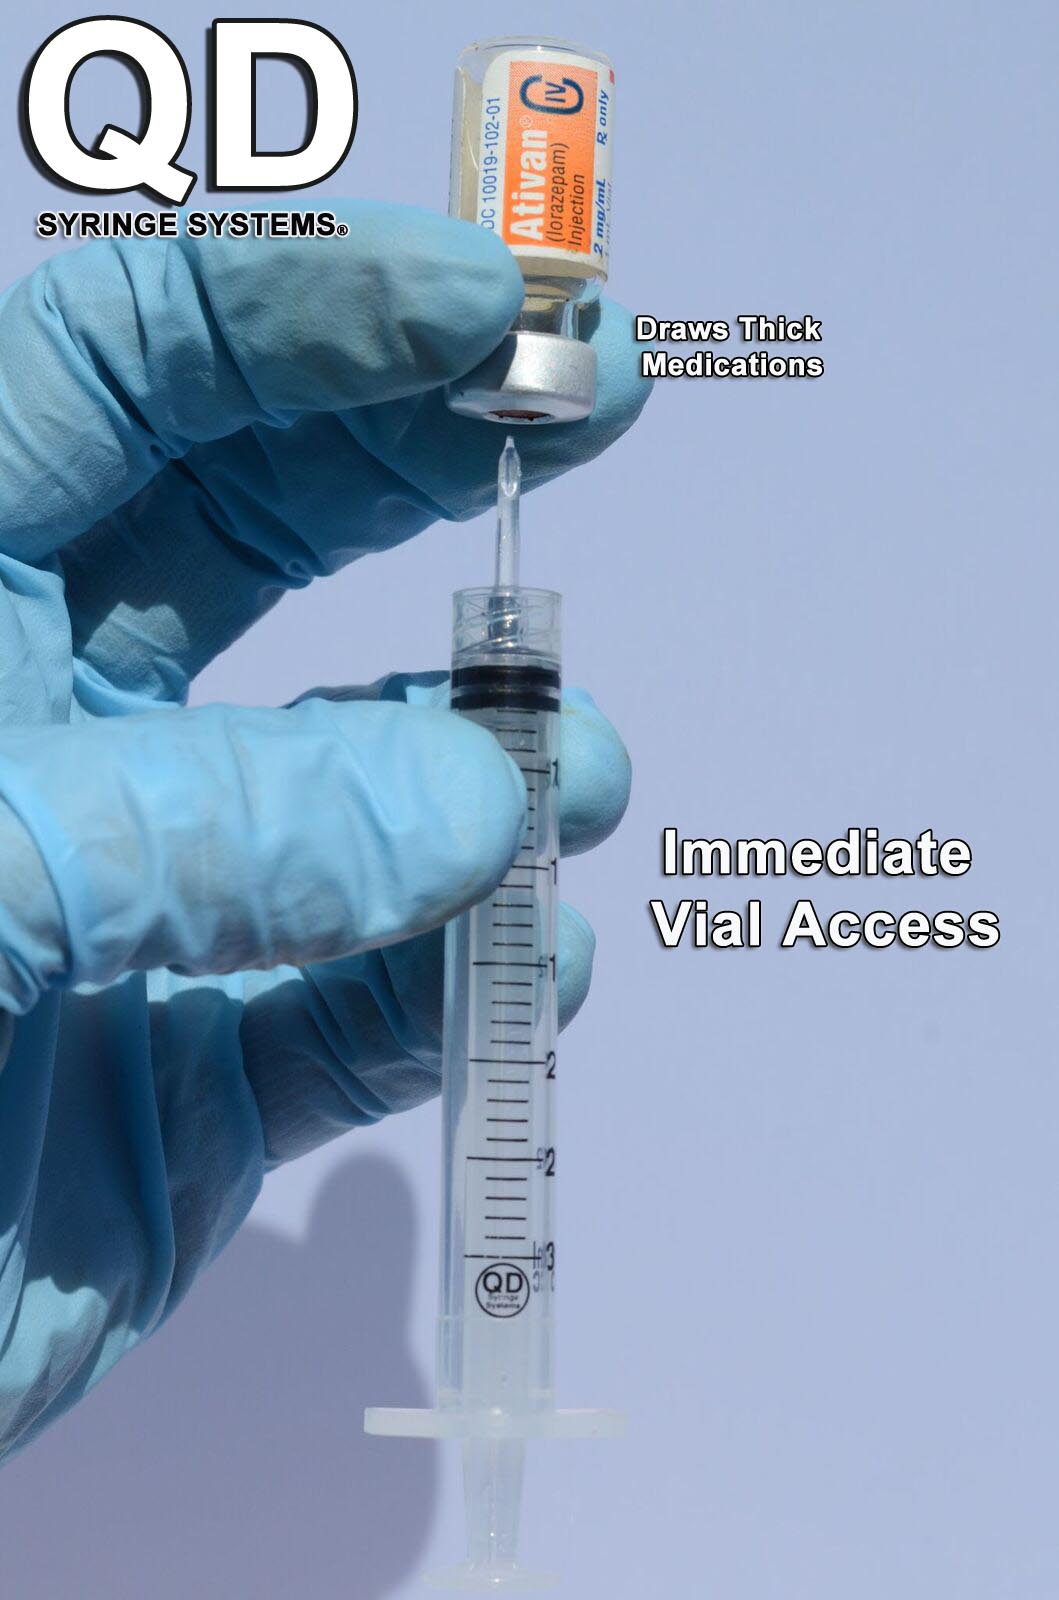 qd-syringe-systems-immediate-medication-vial-access